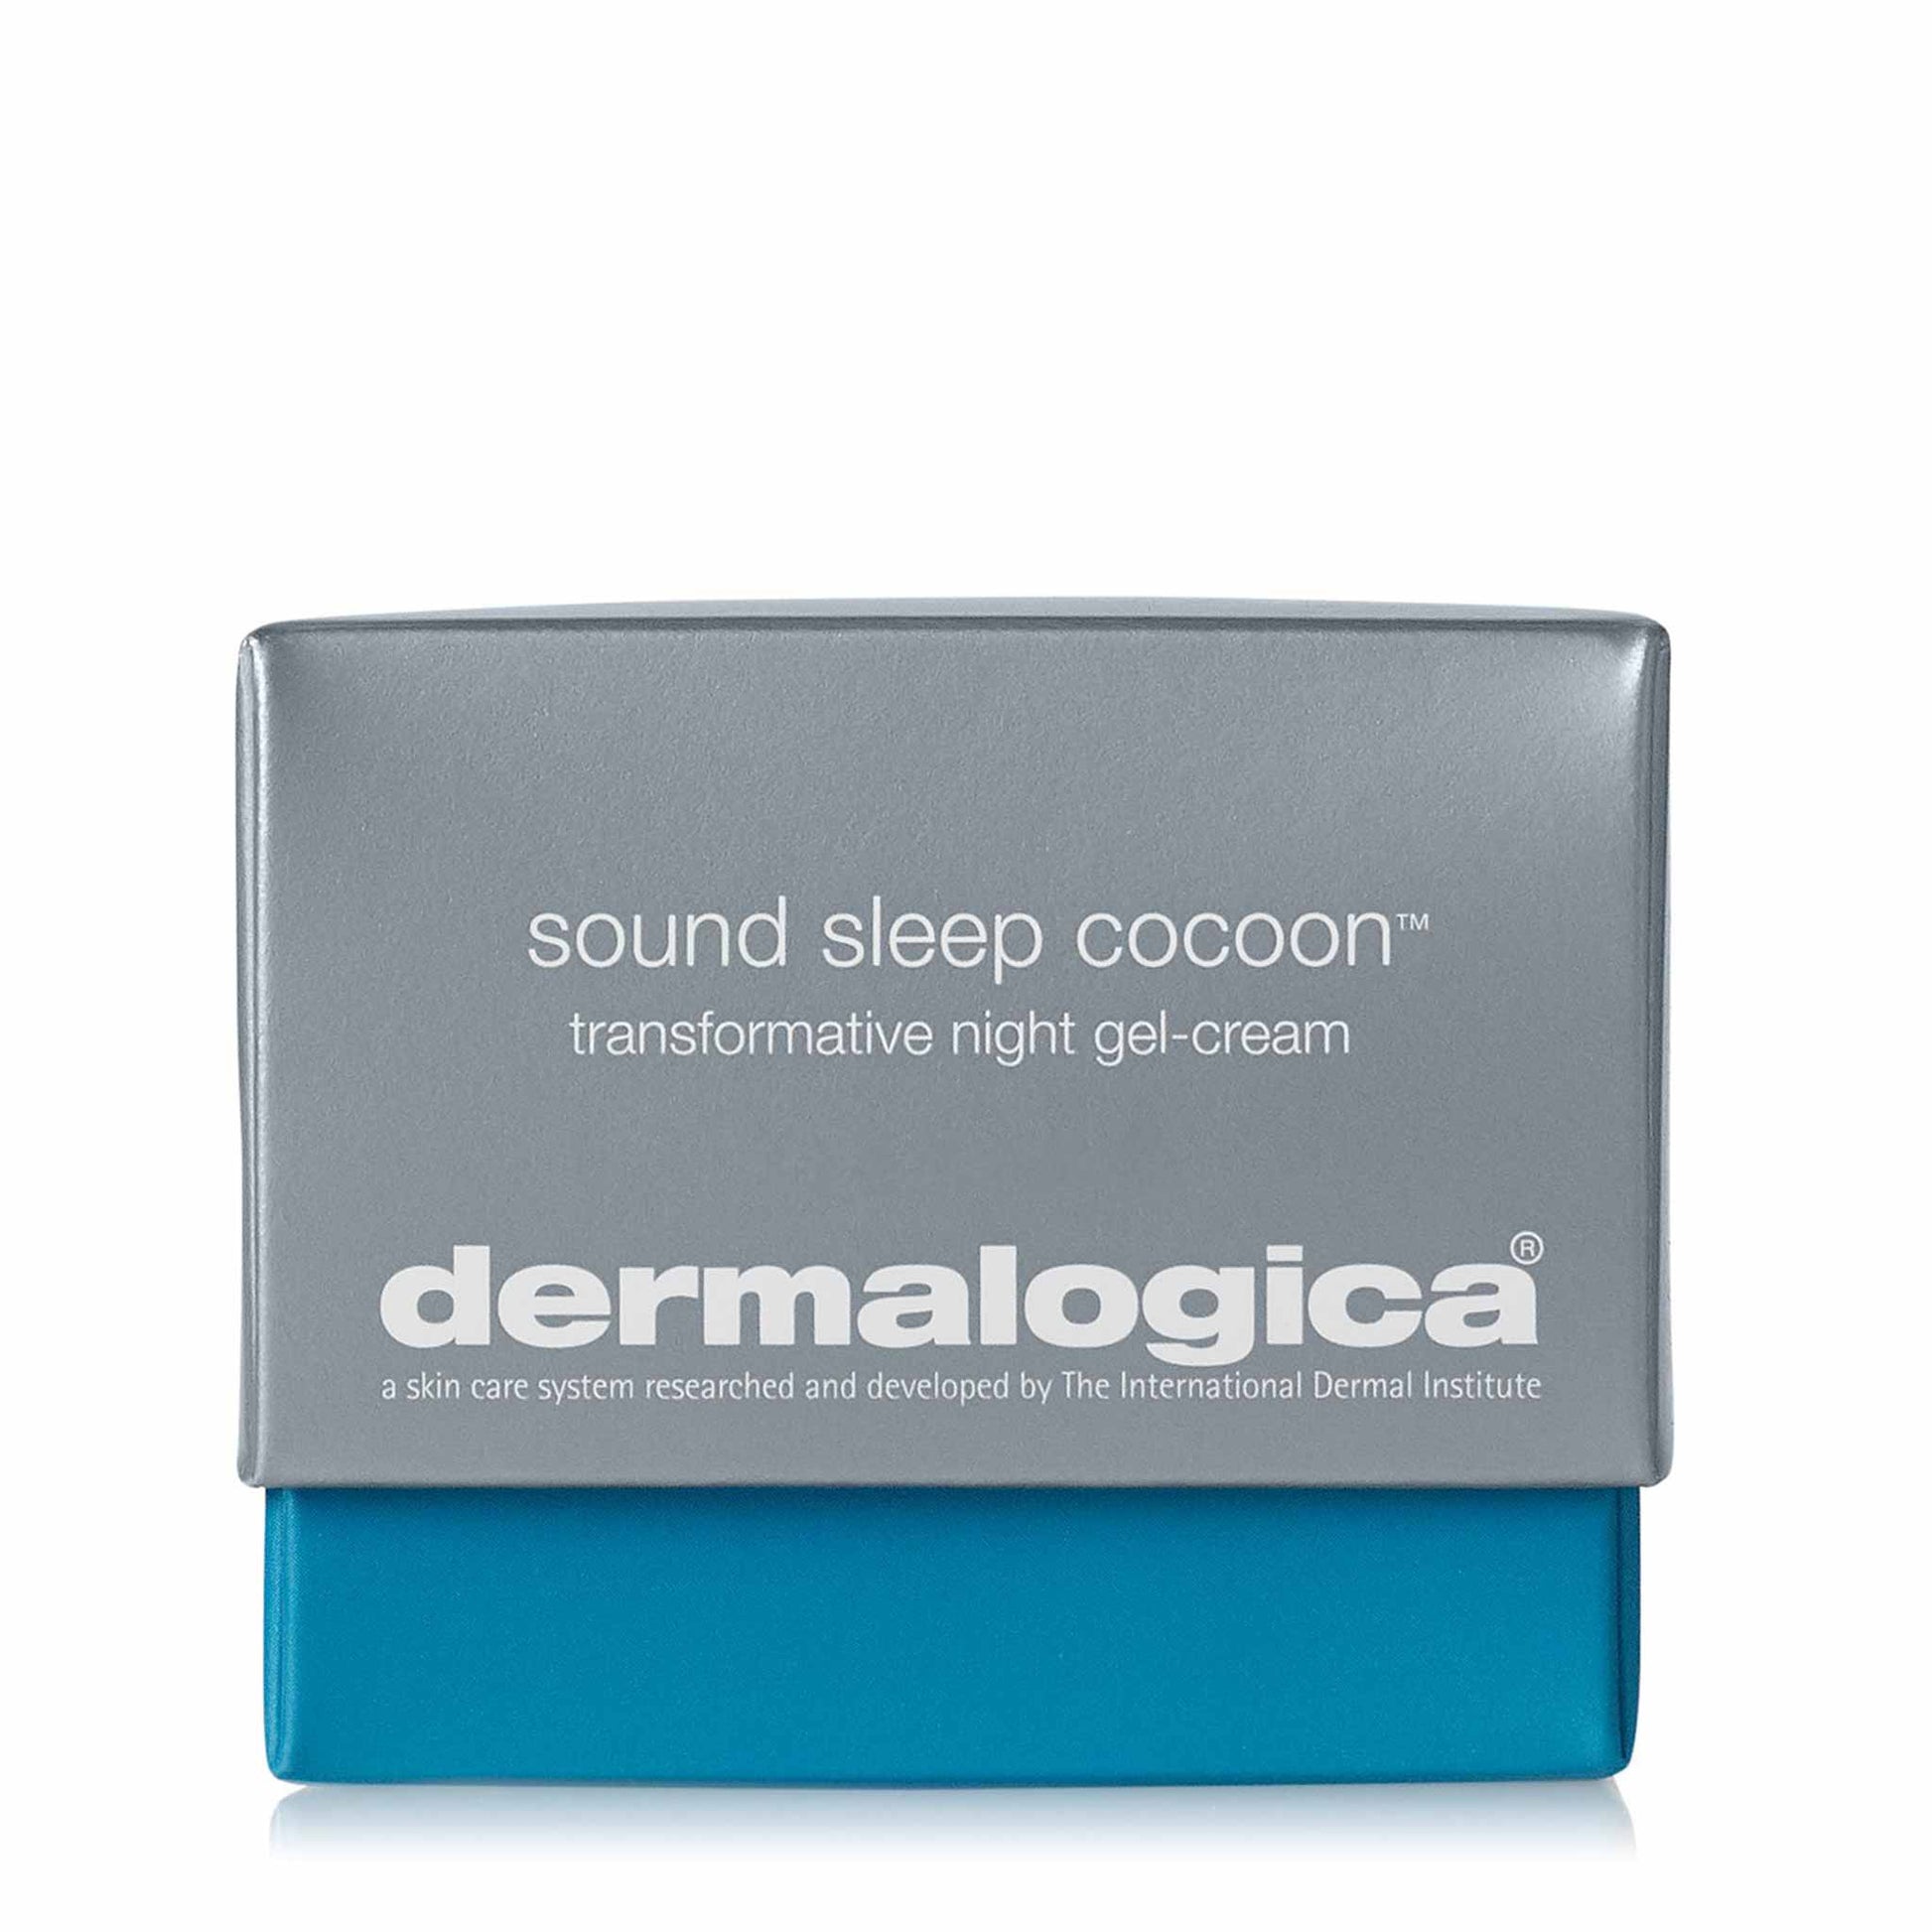 sound sleep cocoon front of carton